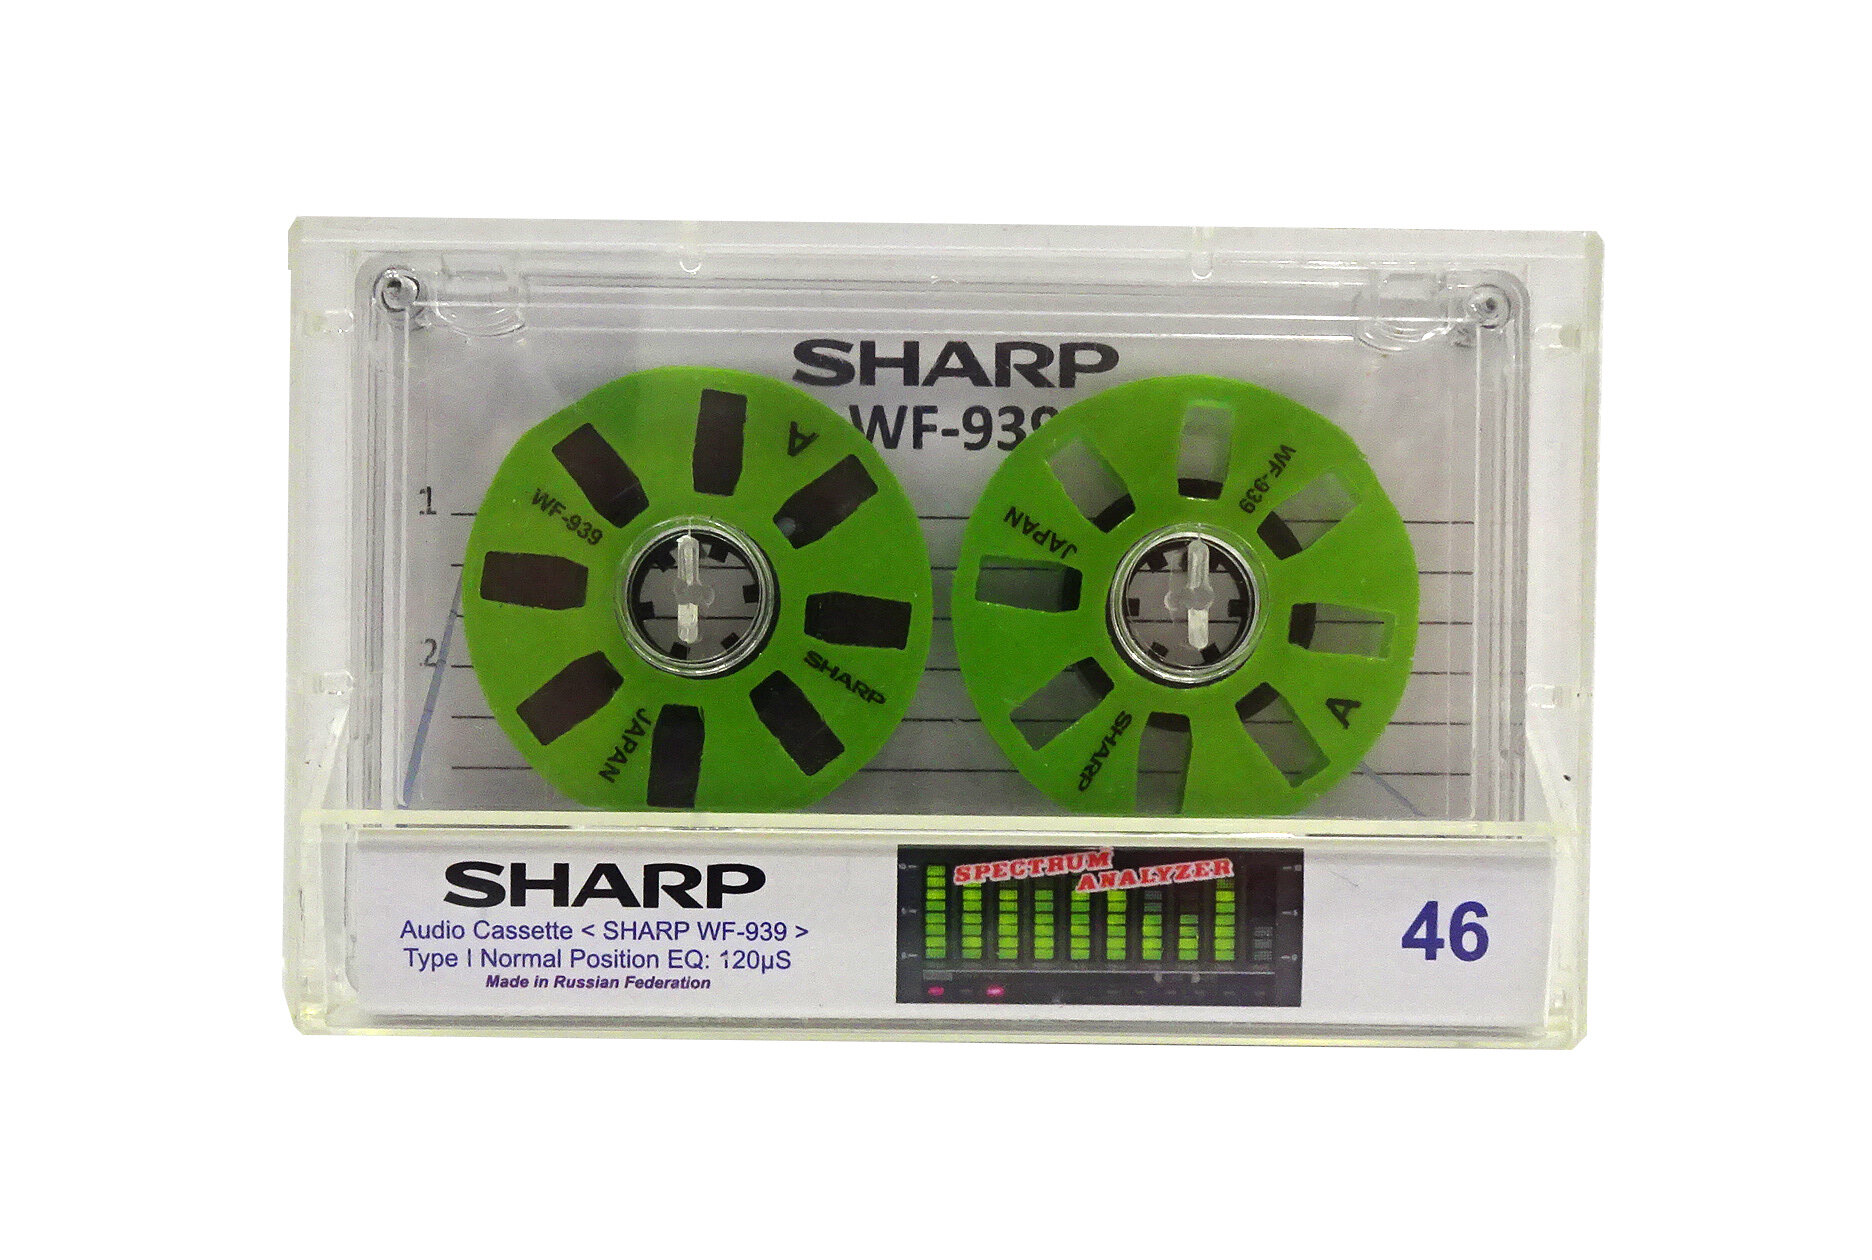 Аудиокассета "Sharp WF-939" с боббинками цвета зелёный неон